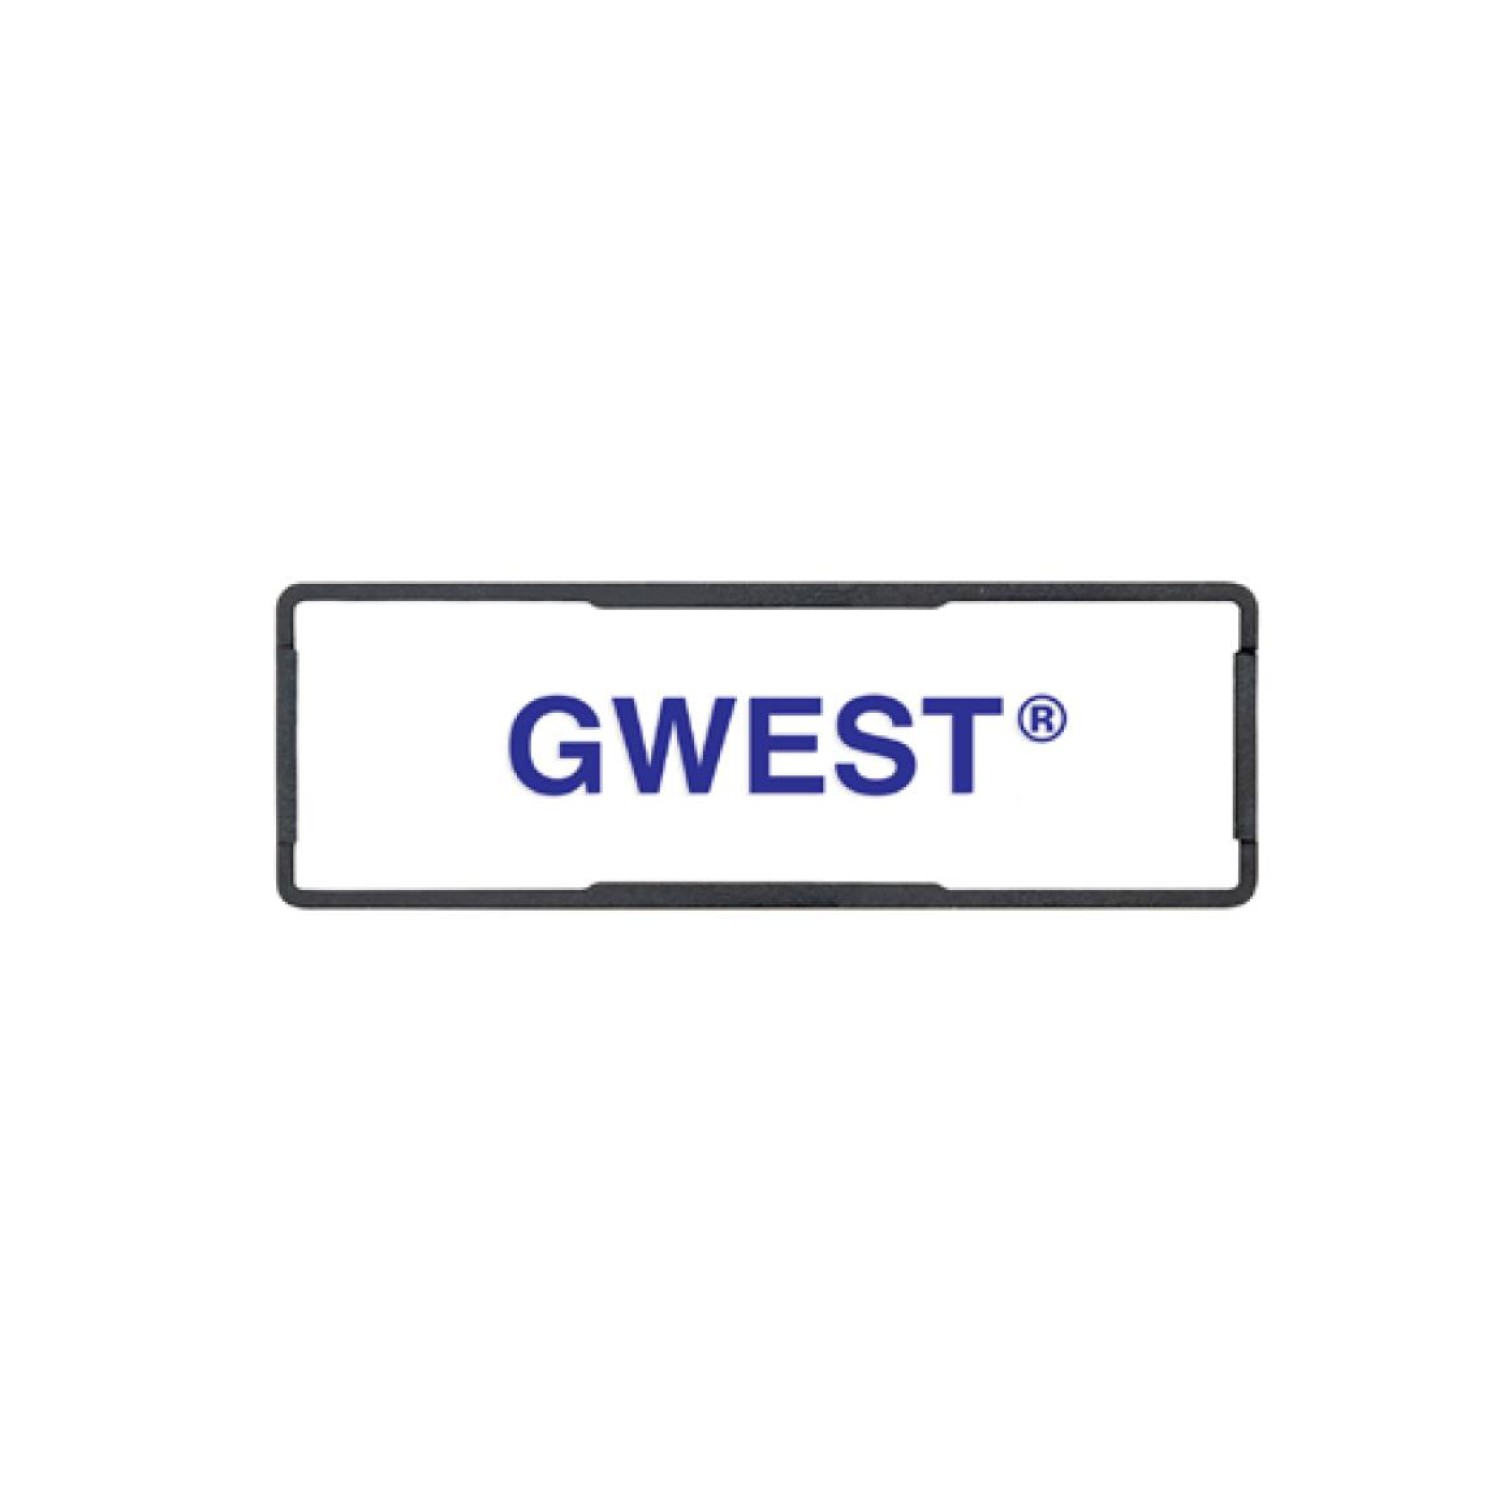 Gwest Pano Etiketi - GPET 3 - 25 Adet